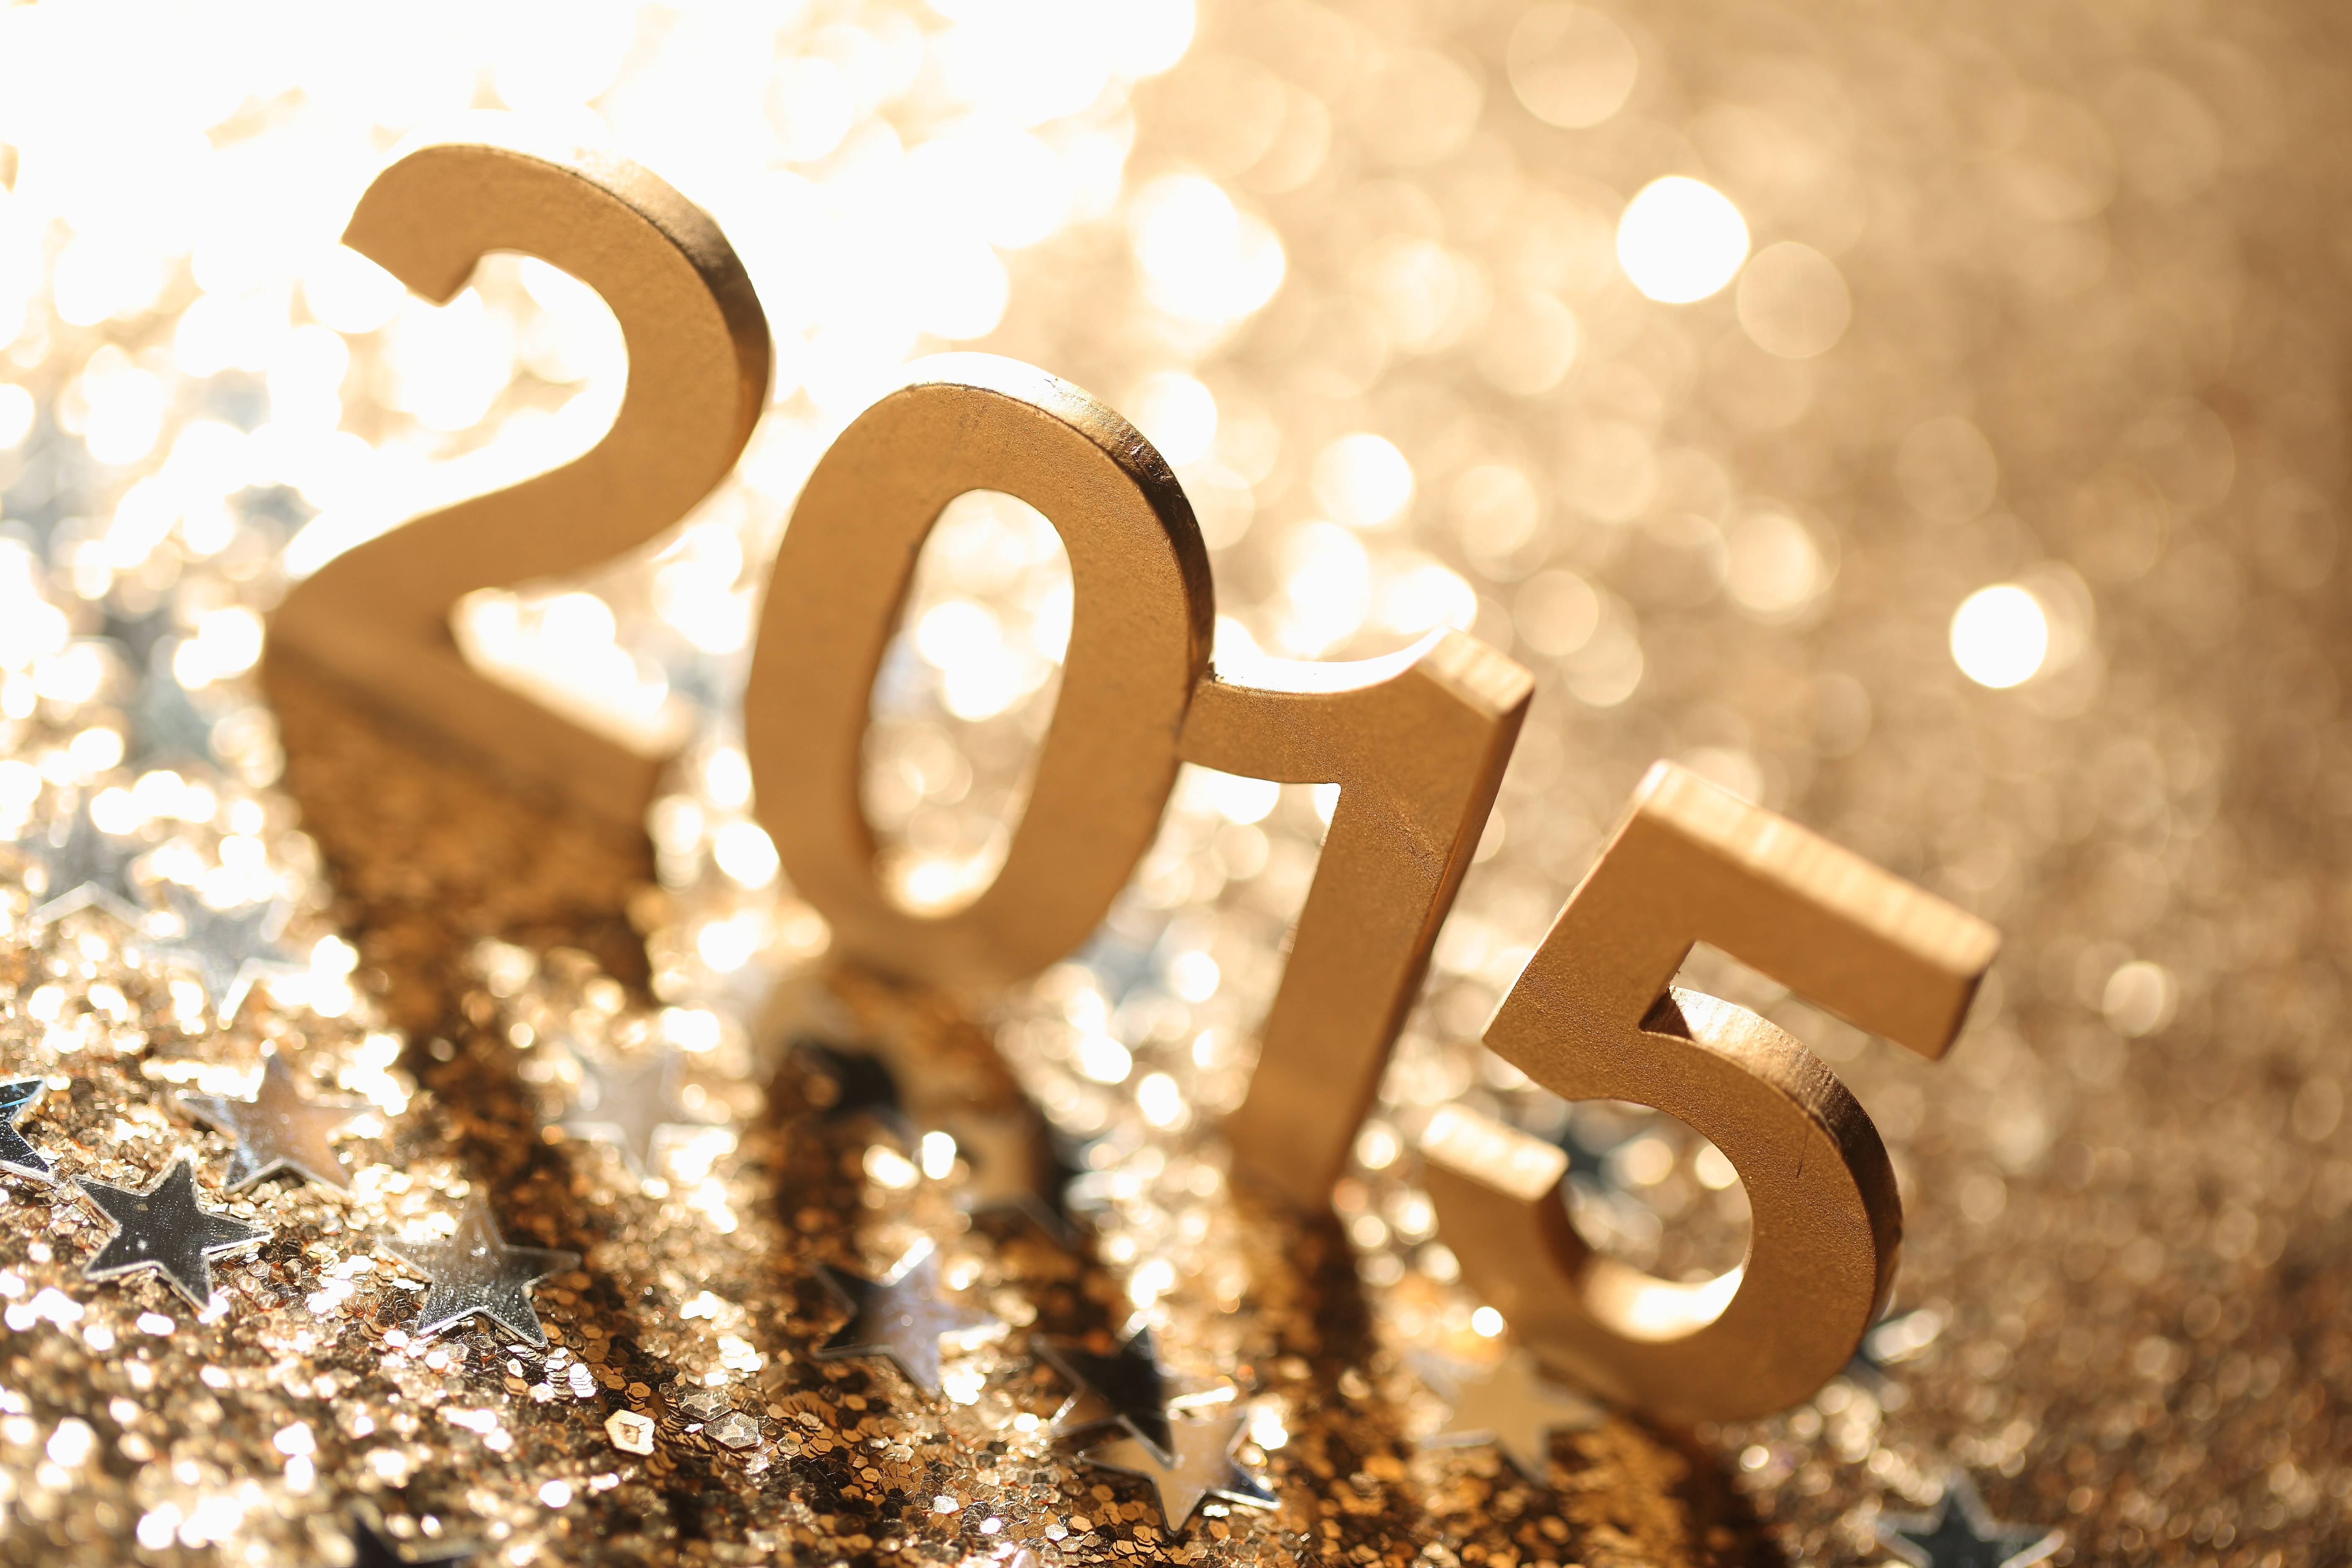 2014 год 2015 год тыс. 2015 Год. Новый год 2015. Цифры на новый год. 2015 Год картинки.